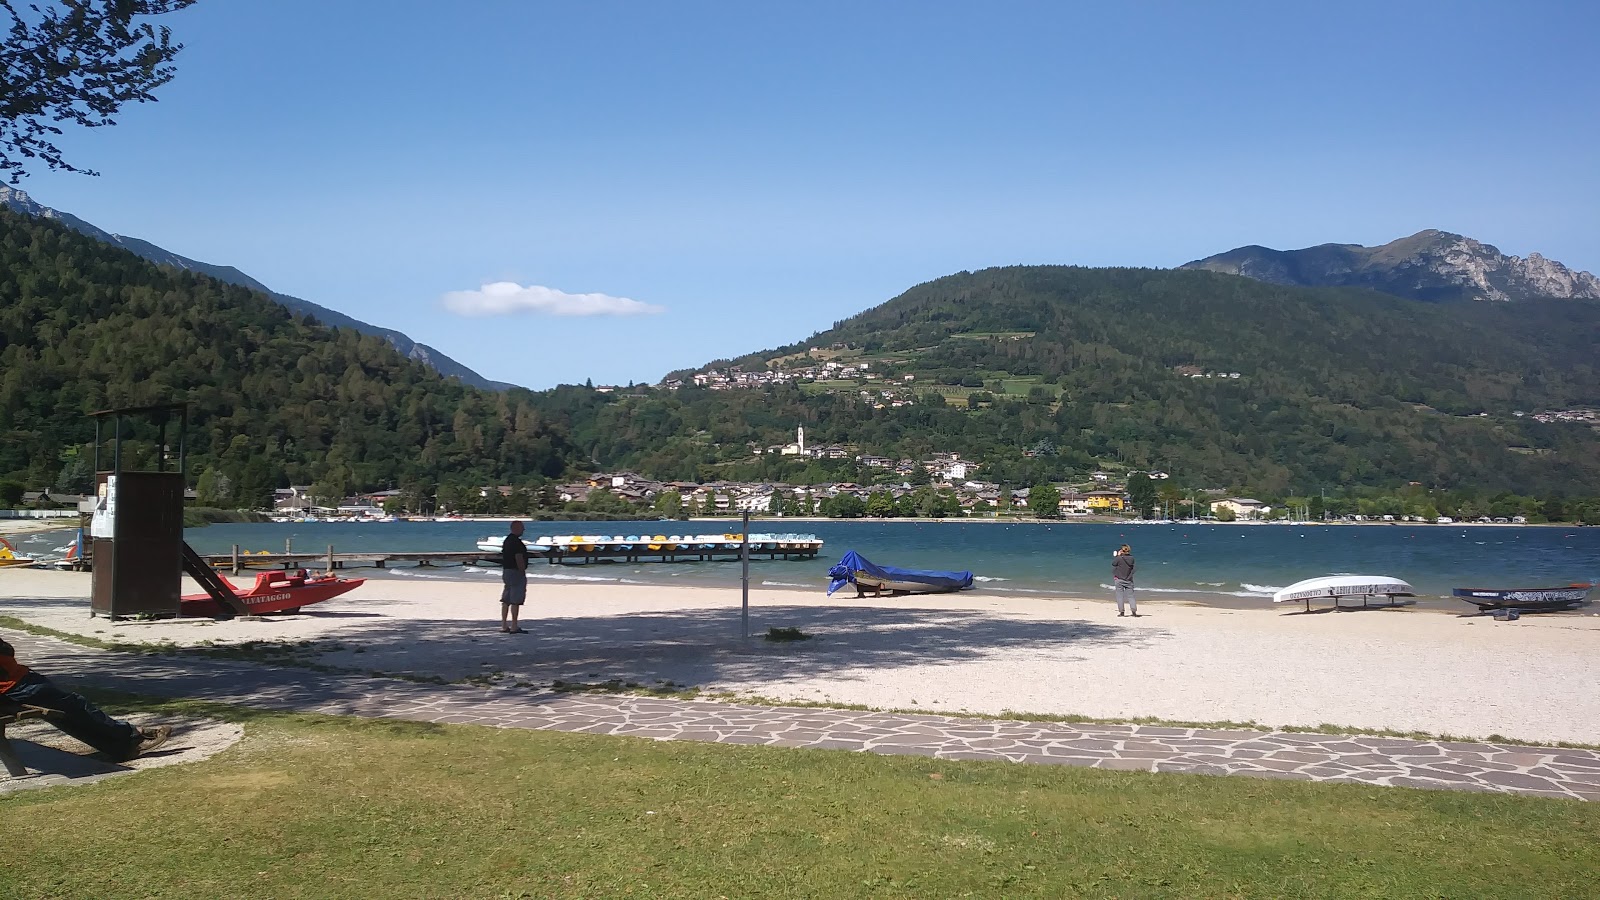 Foto de Spiaggia Pescatore - lugar popular entre os apreciadores de relaxamento